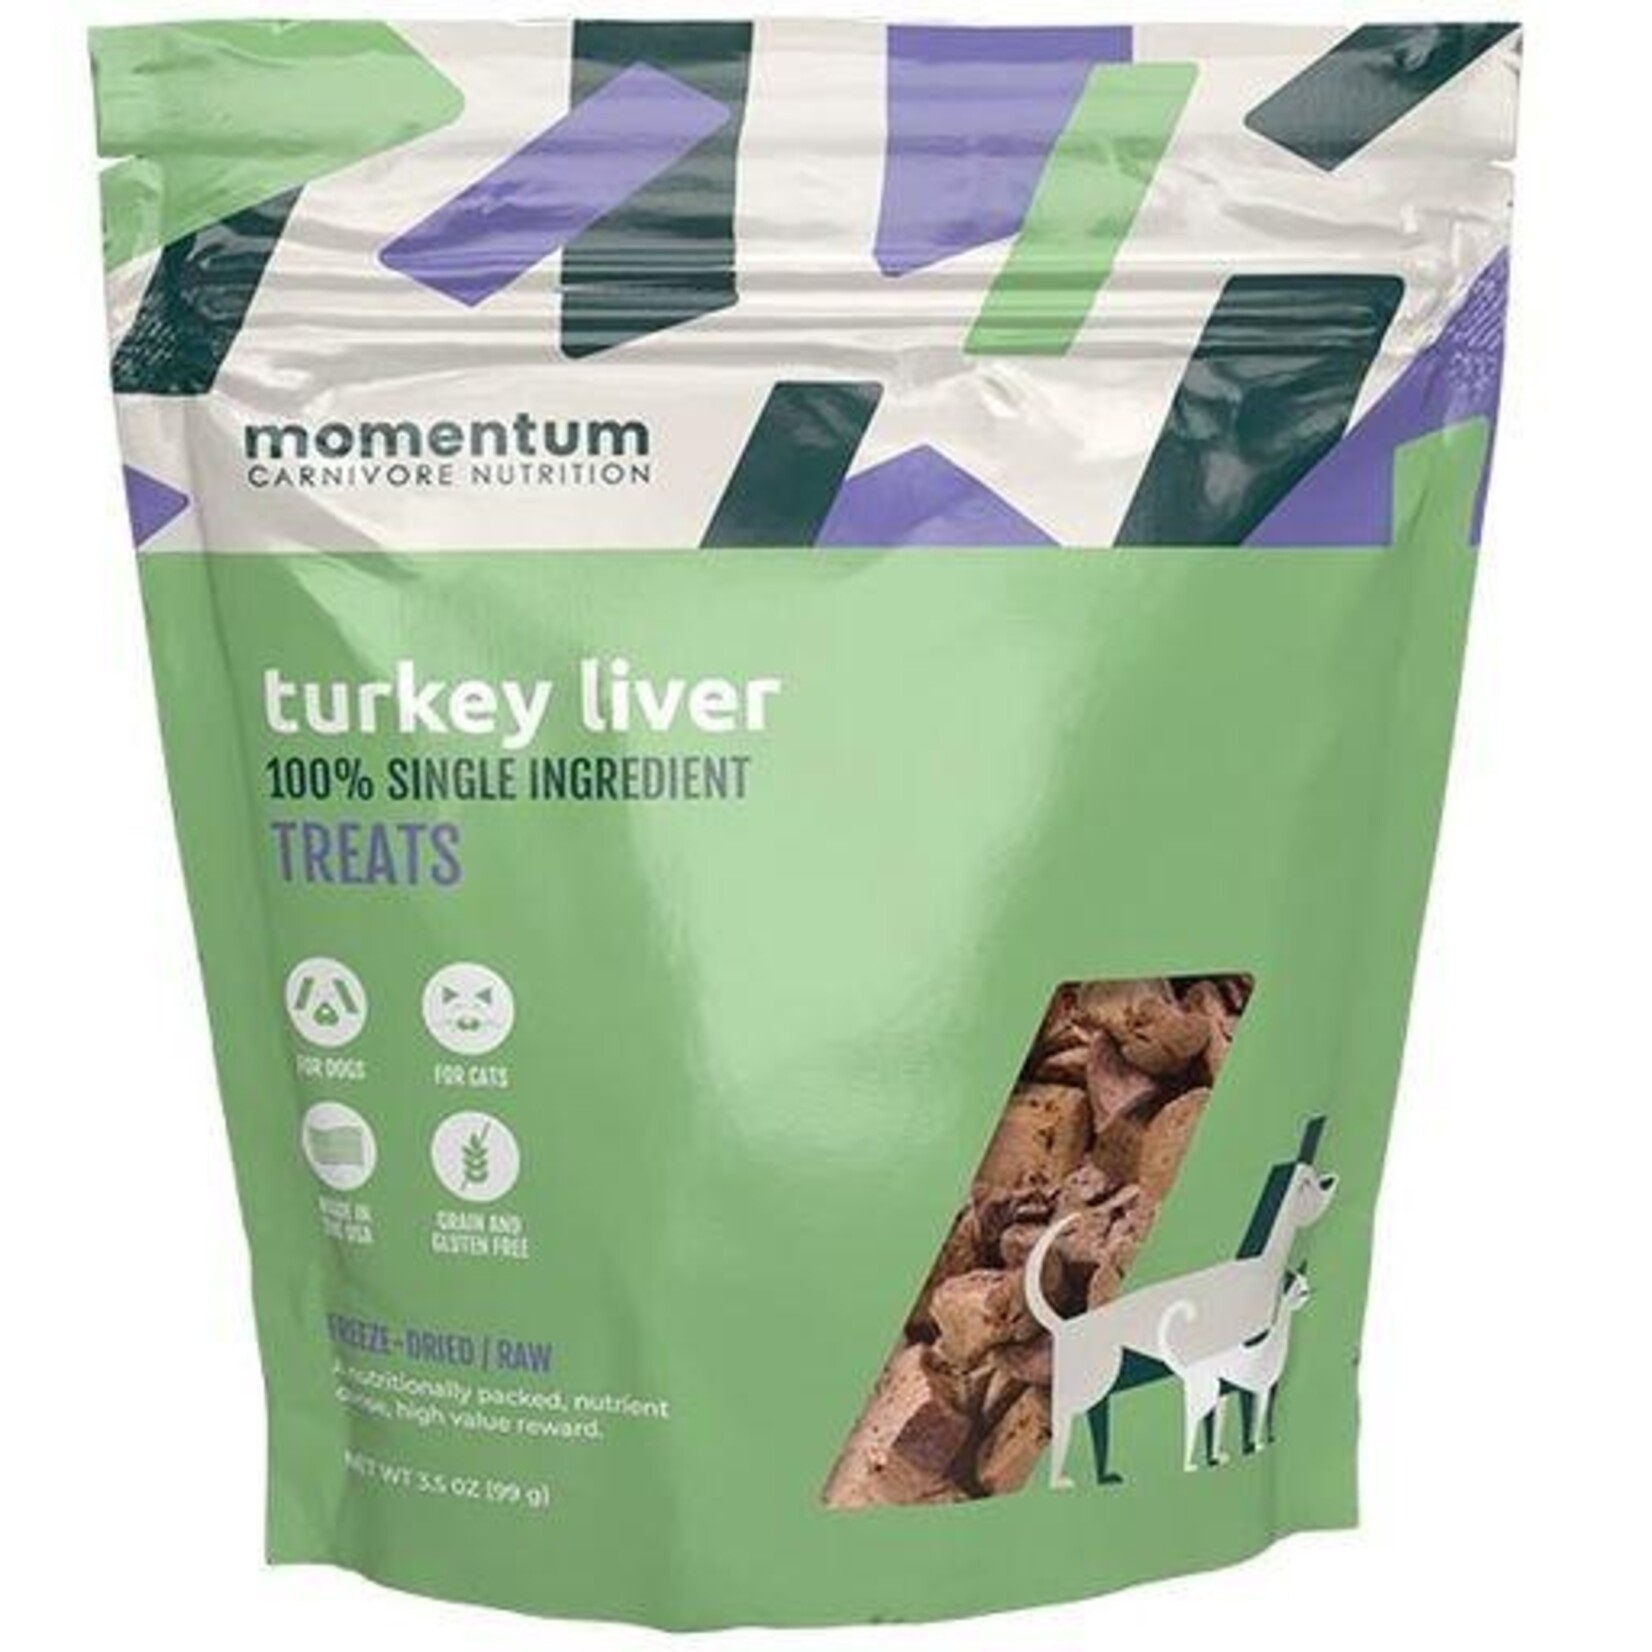 Momentum Carnivore Nutrition 3.5 oz. - Turkey Liver - Freeze Dried Treats - Momentum / Moretti's